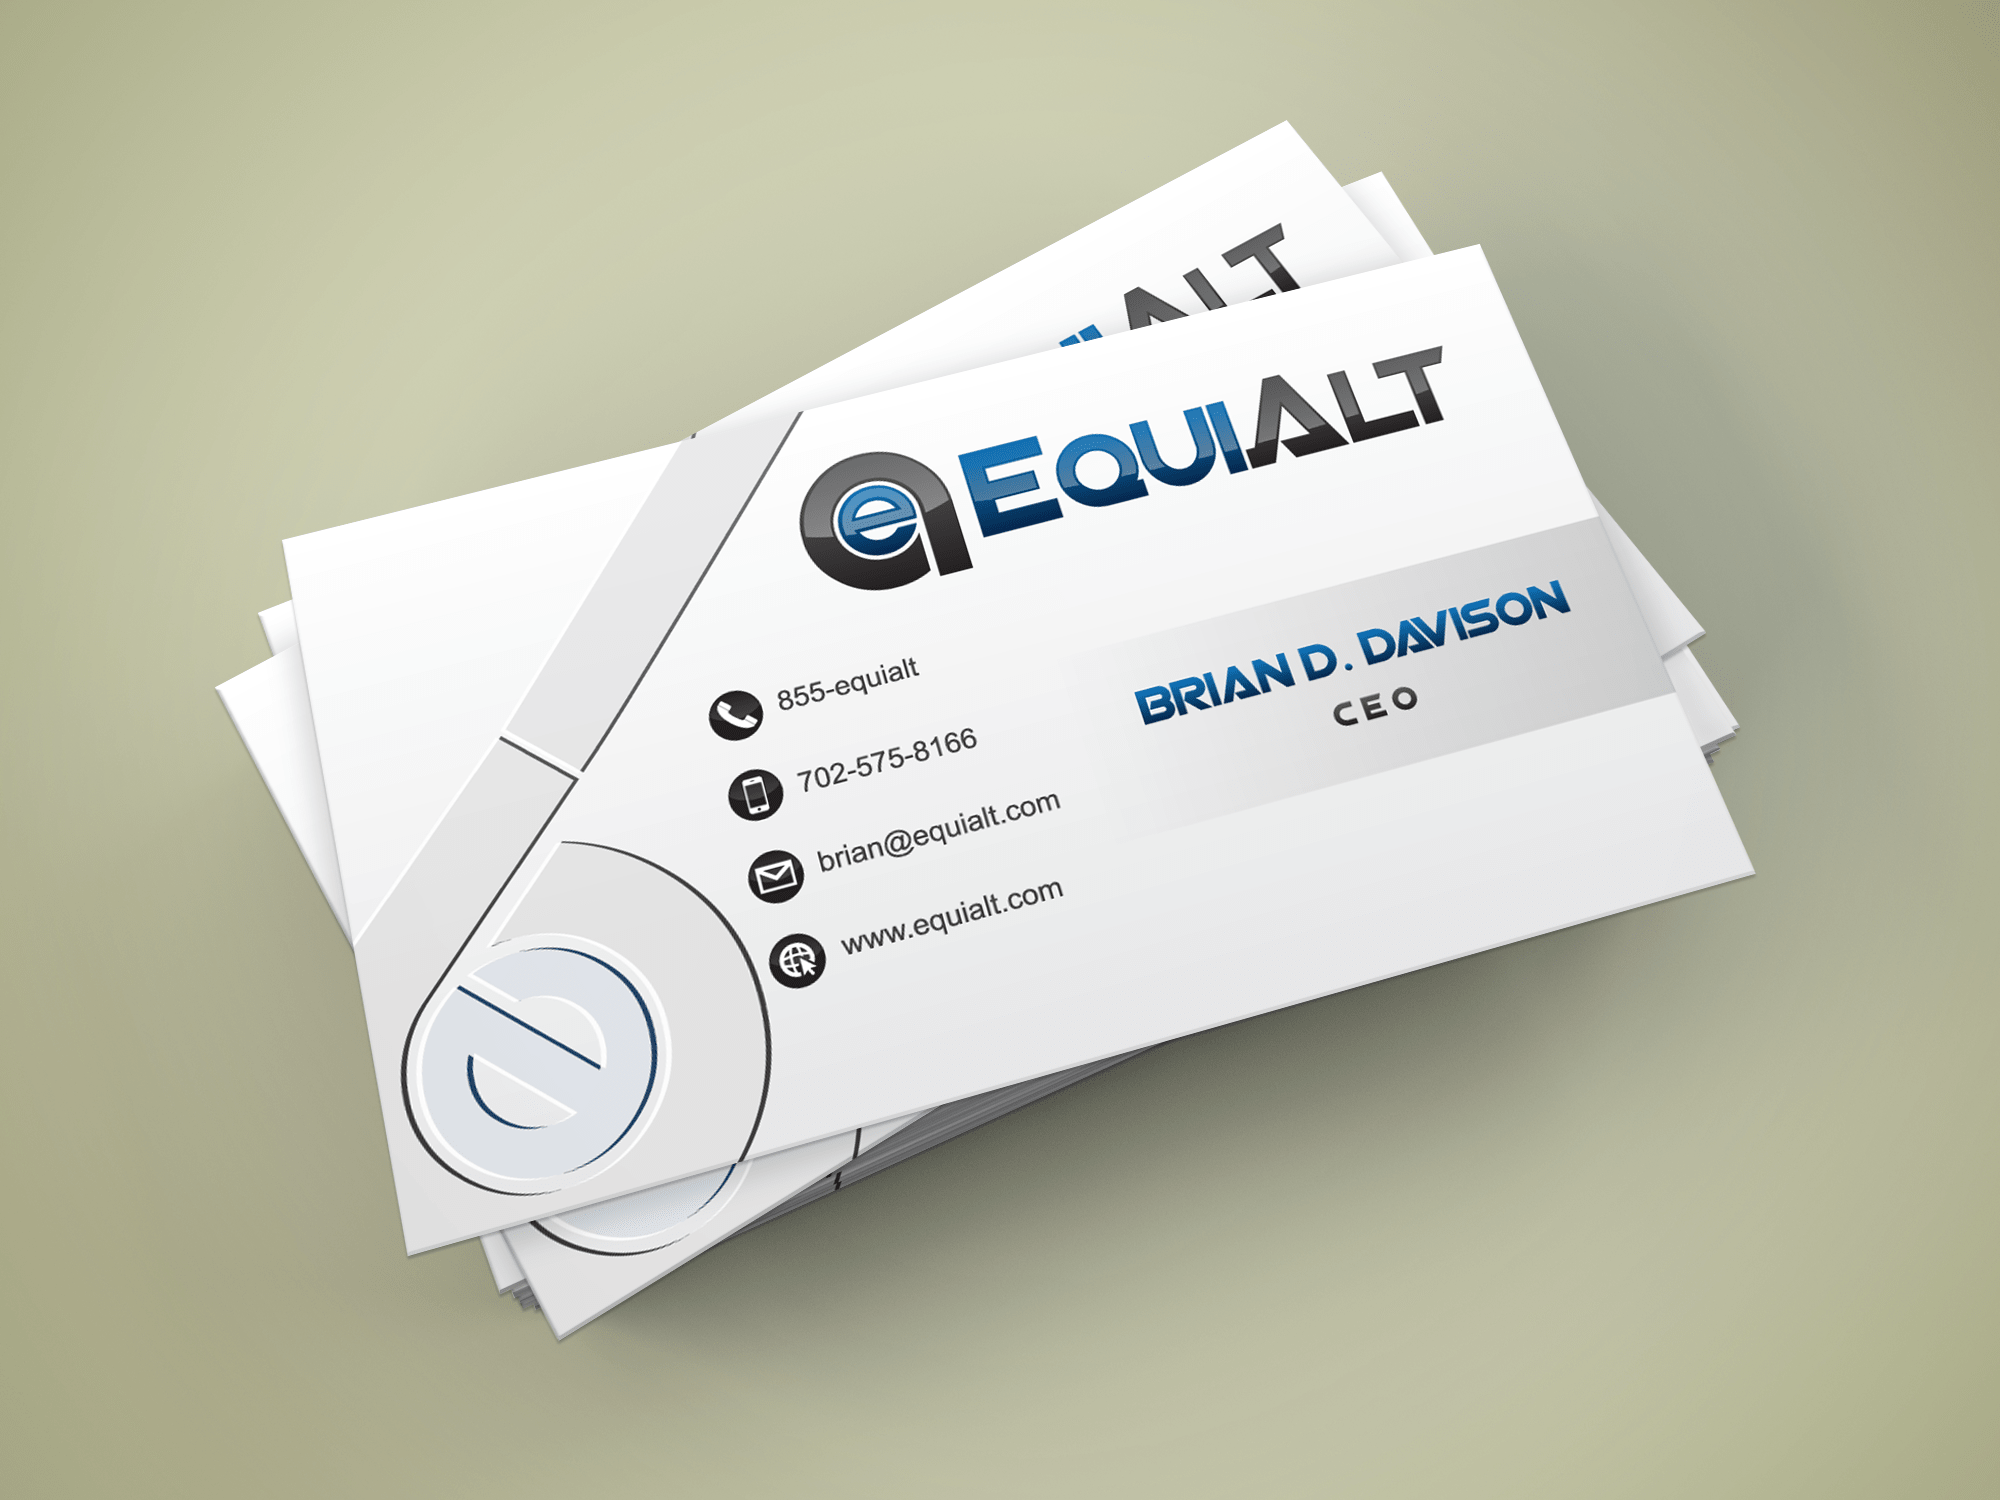 Equialt card4